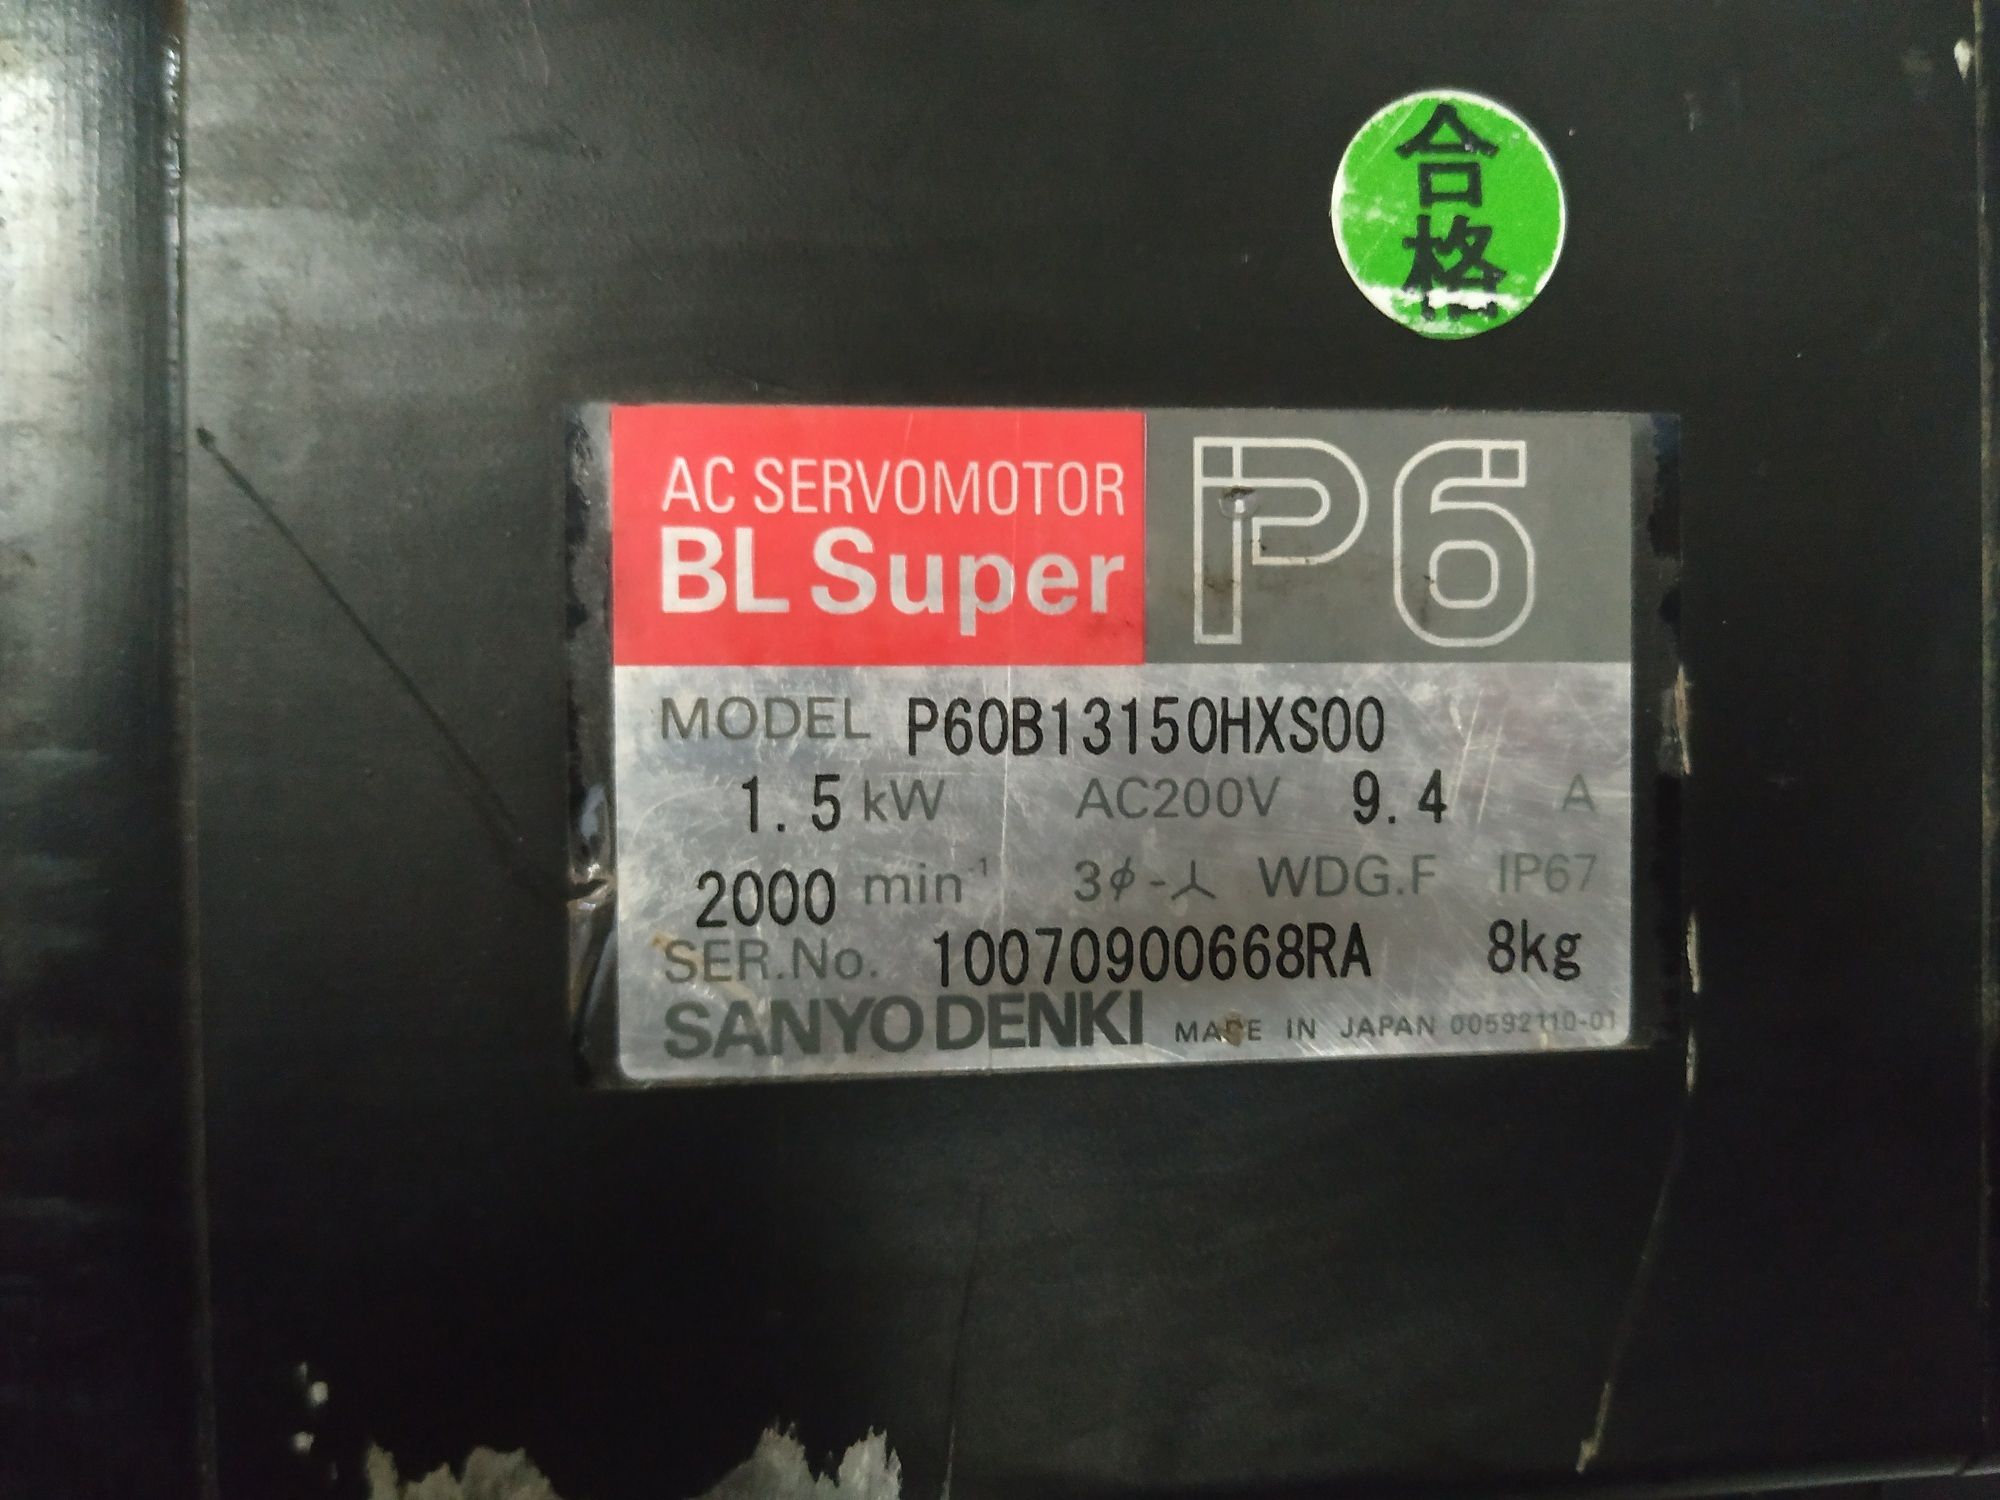 SANYODENKI BL SUPPER P6 AC SERVO MOTOR P60B13150HXS00